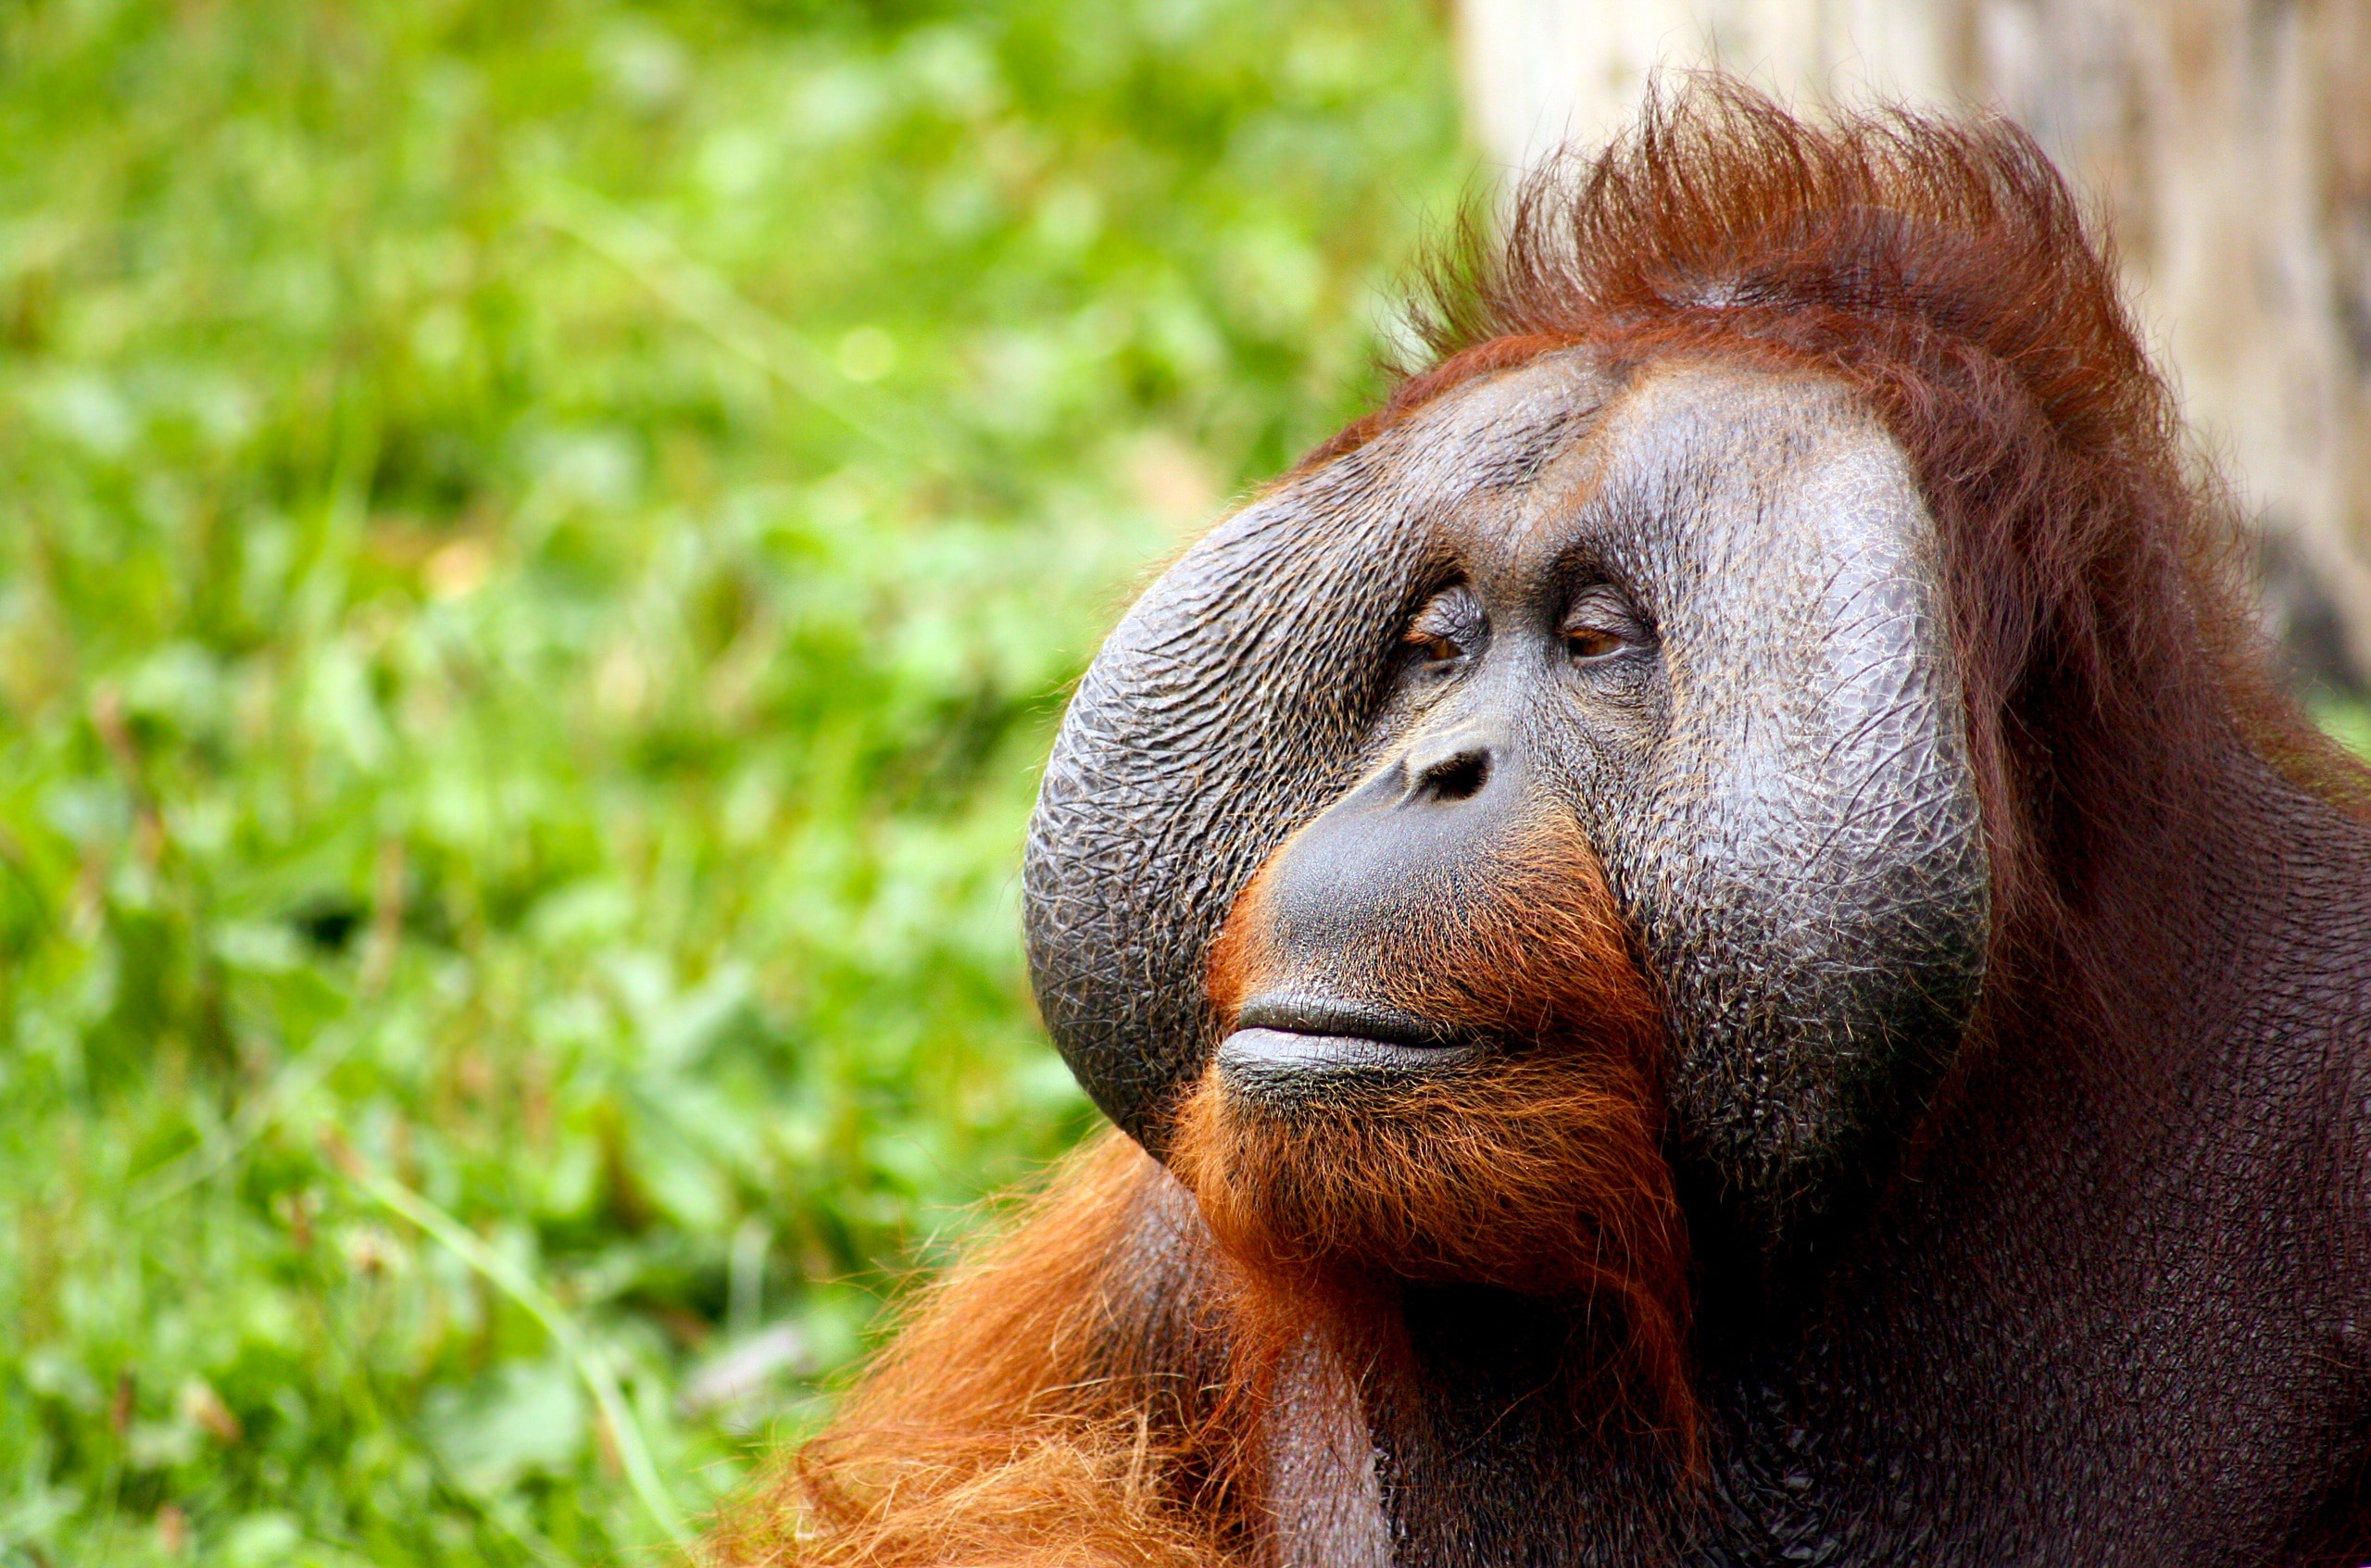 Hair, Face, Orangutan, Monkey, Animal, one animal, animals in the wild